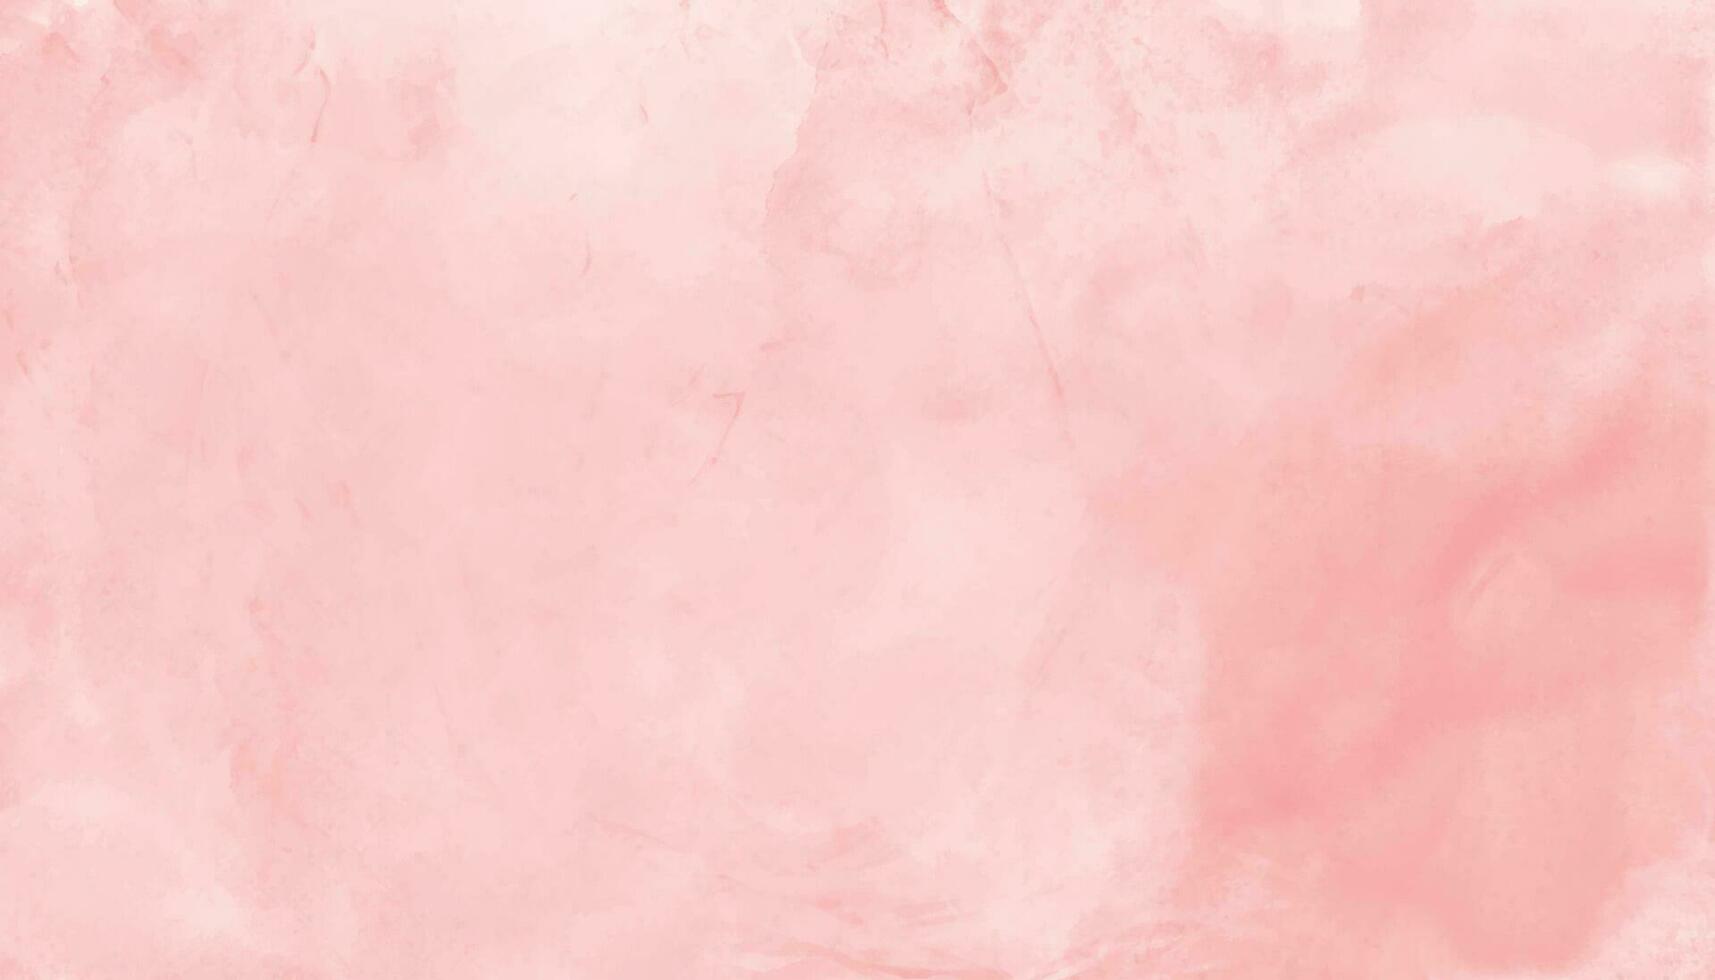 morbido rosa acquerello sfondo. fantasia liscio leggero rosa acquerello strutturato vettore